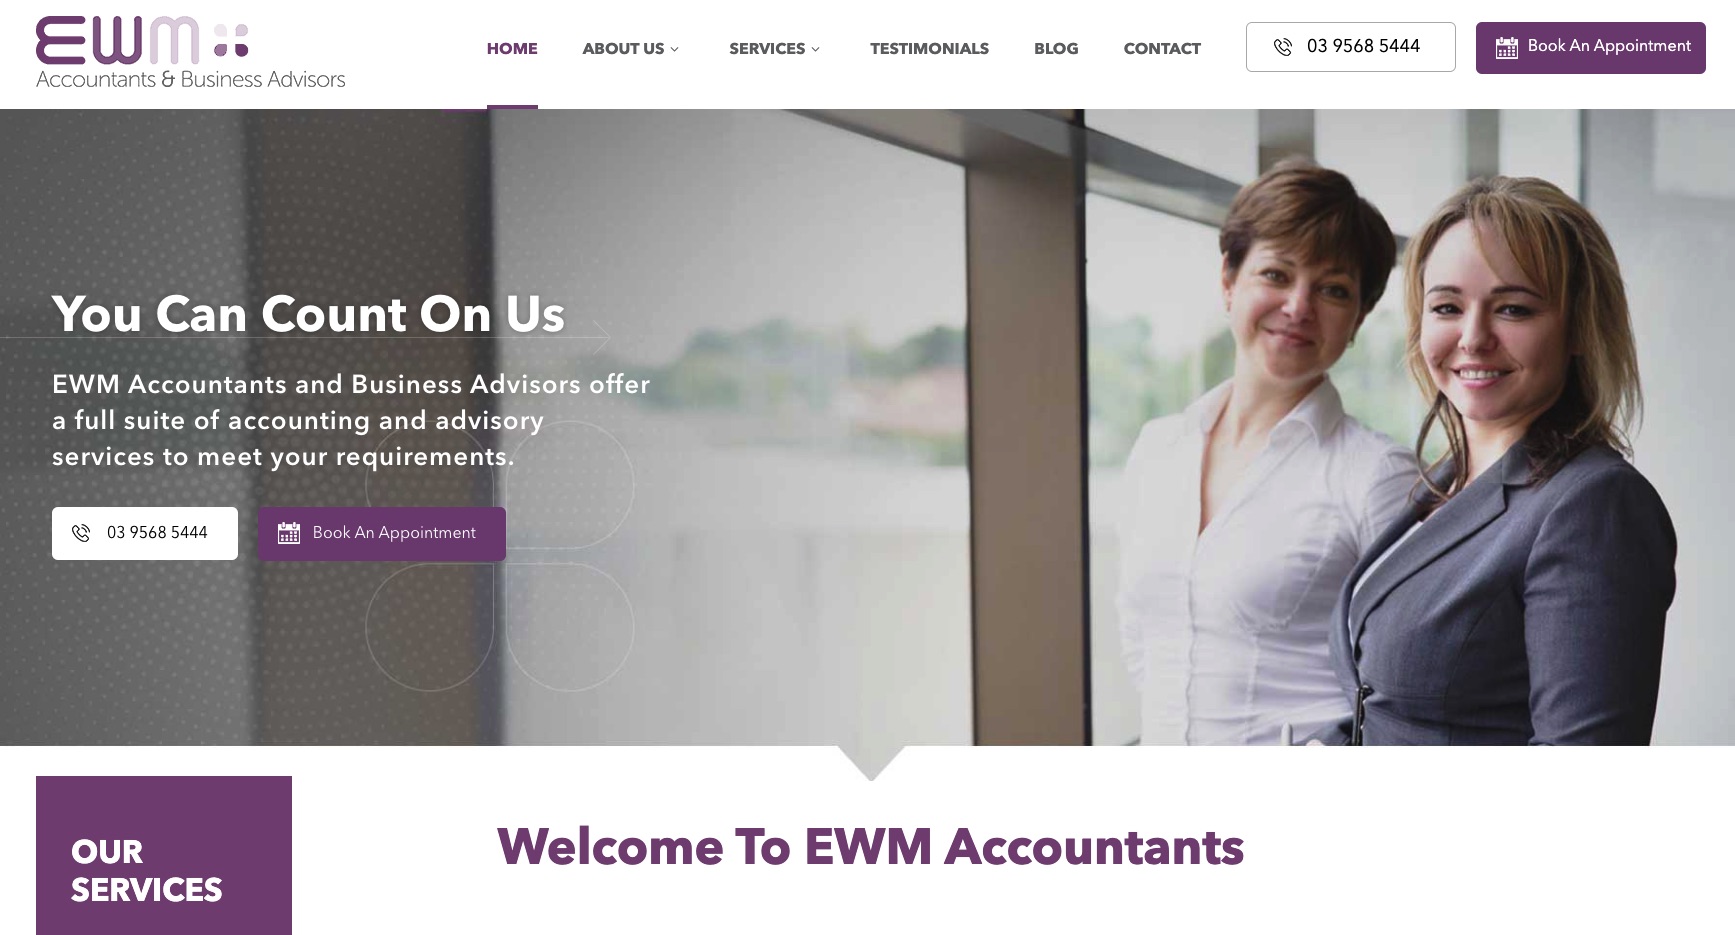 ewm accountants & business advisors